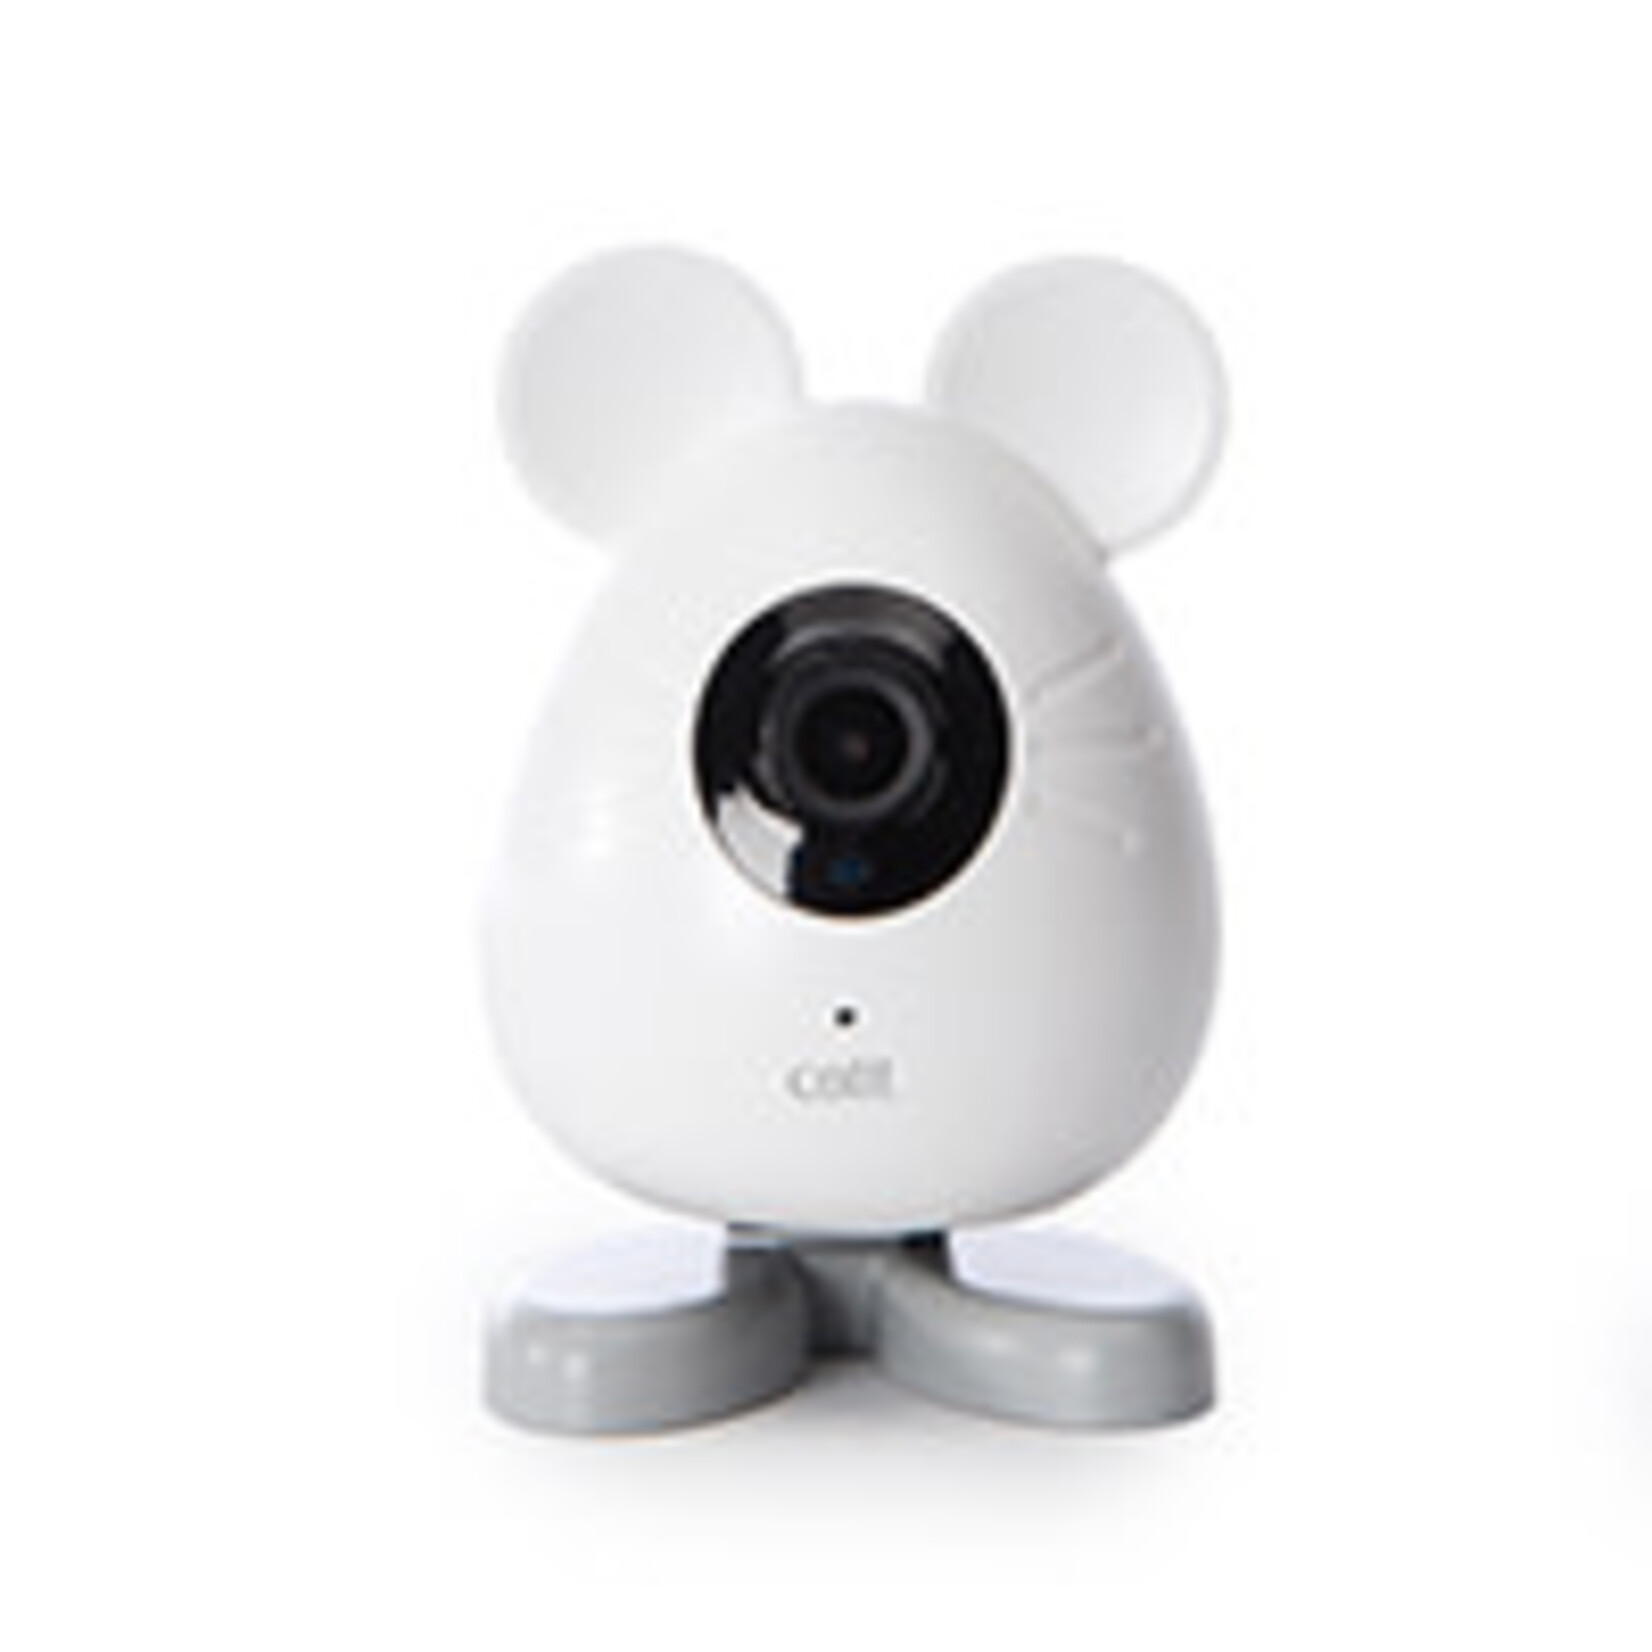 Catit Catit Pixi Caméra Souris Intelligente/Smart Mouse Camera